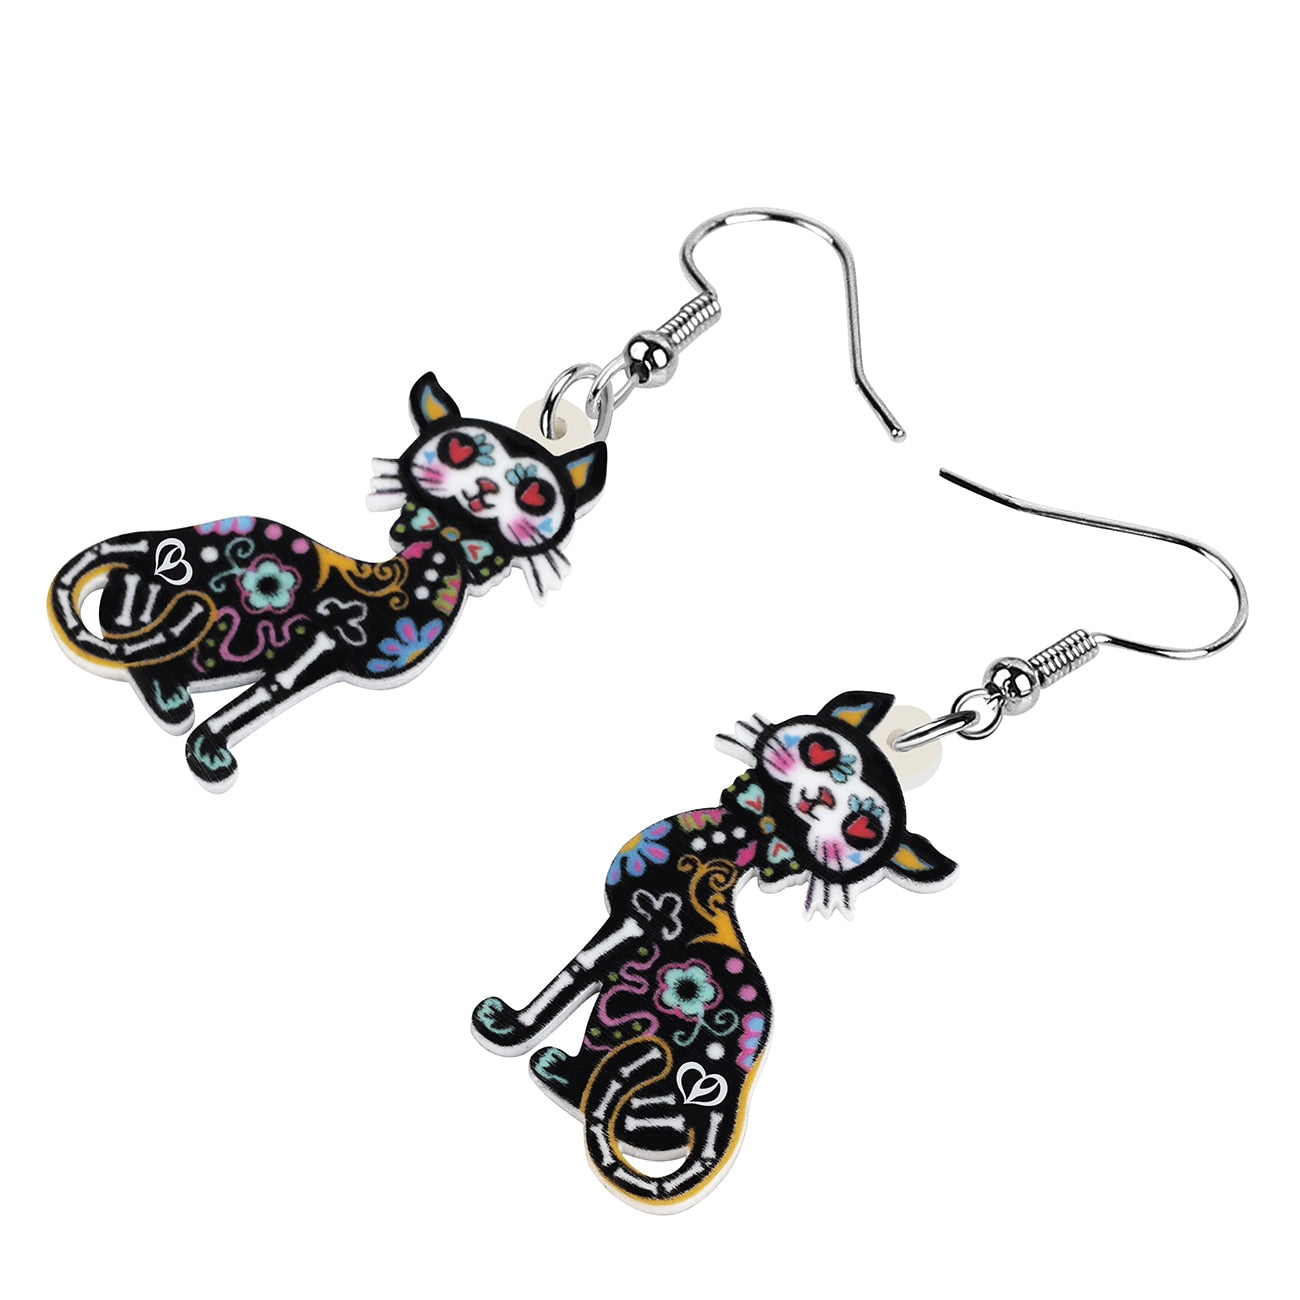 Cat Skeleton Earrings - Cat earrings